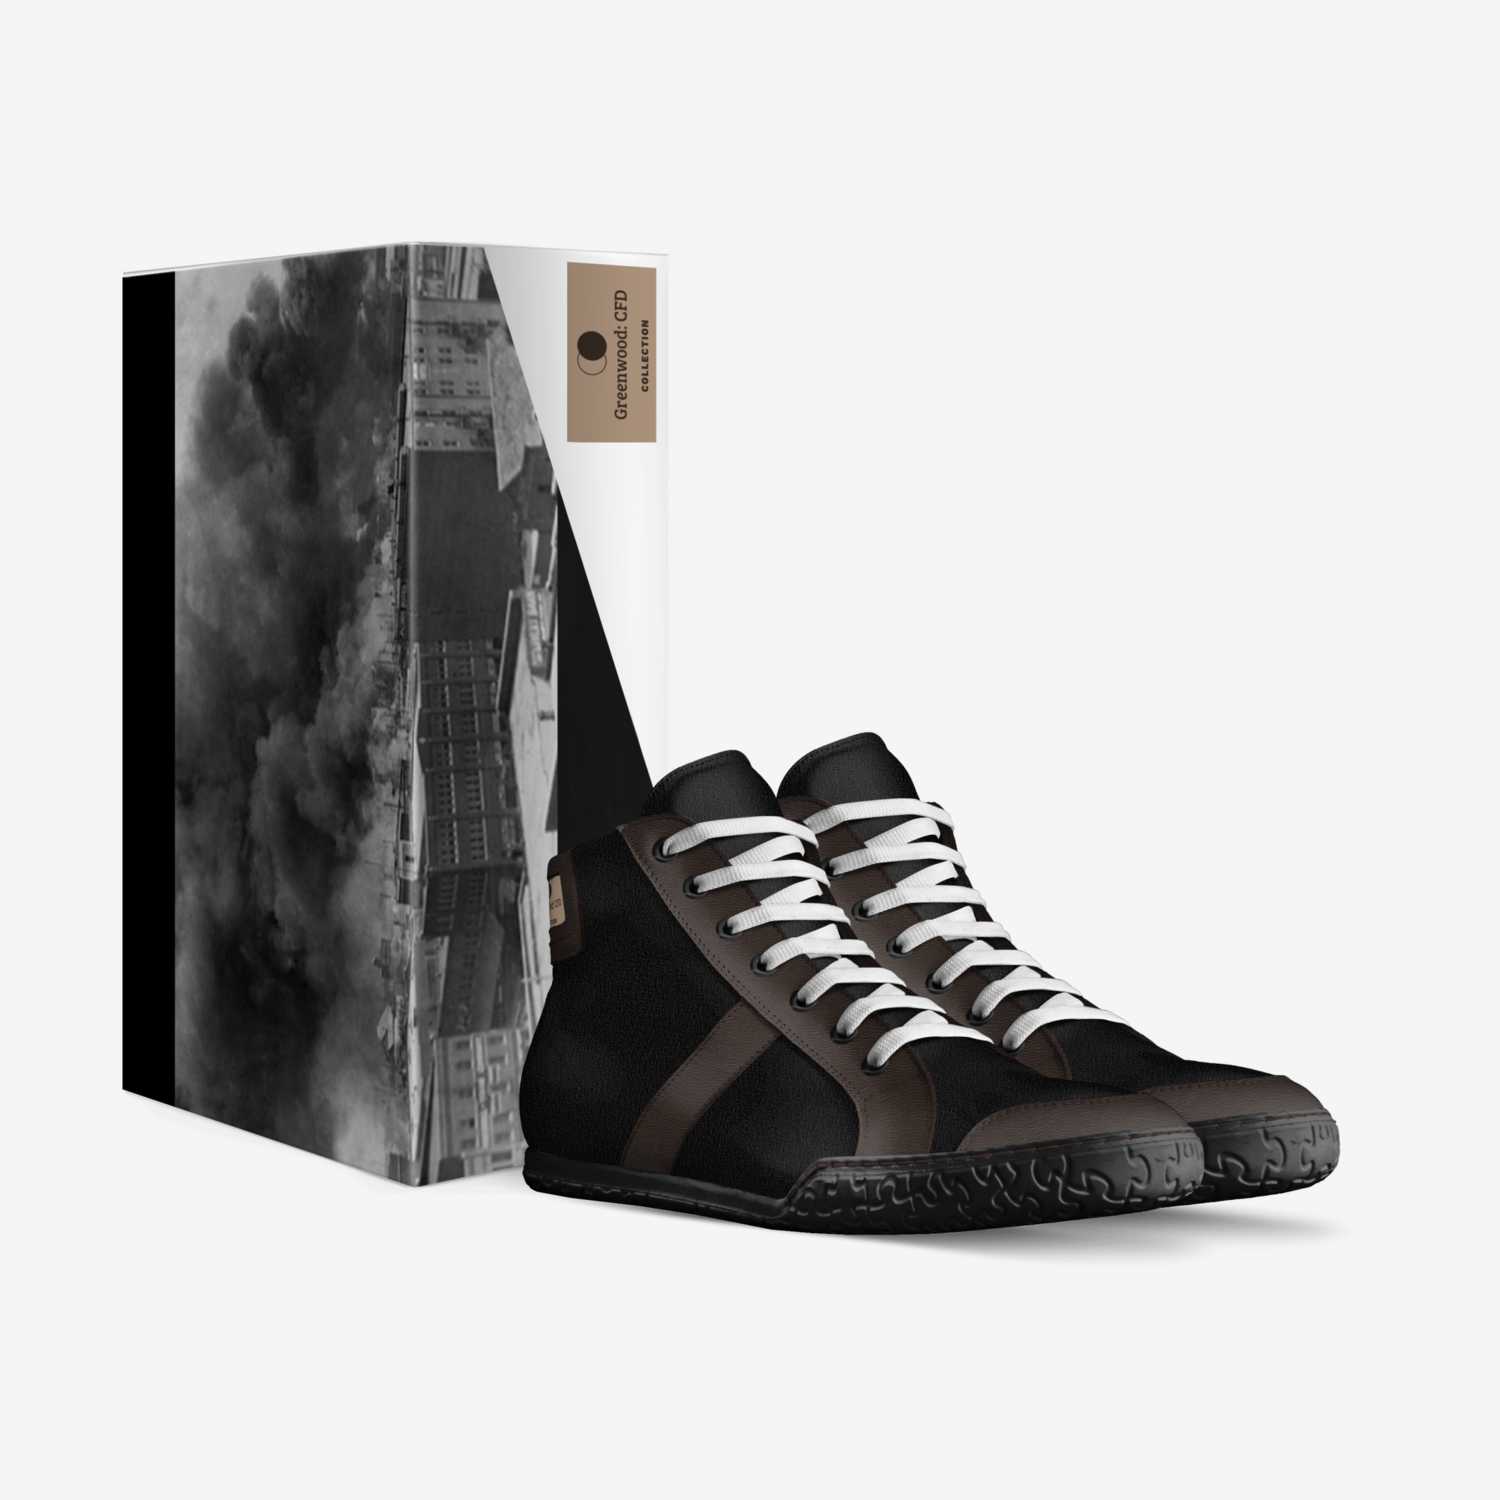 BlackWallstreet CF custom made in Italy shoes by Bay Robertson | Box view